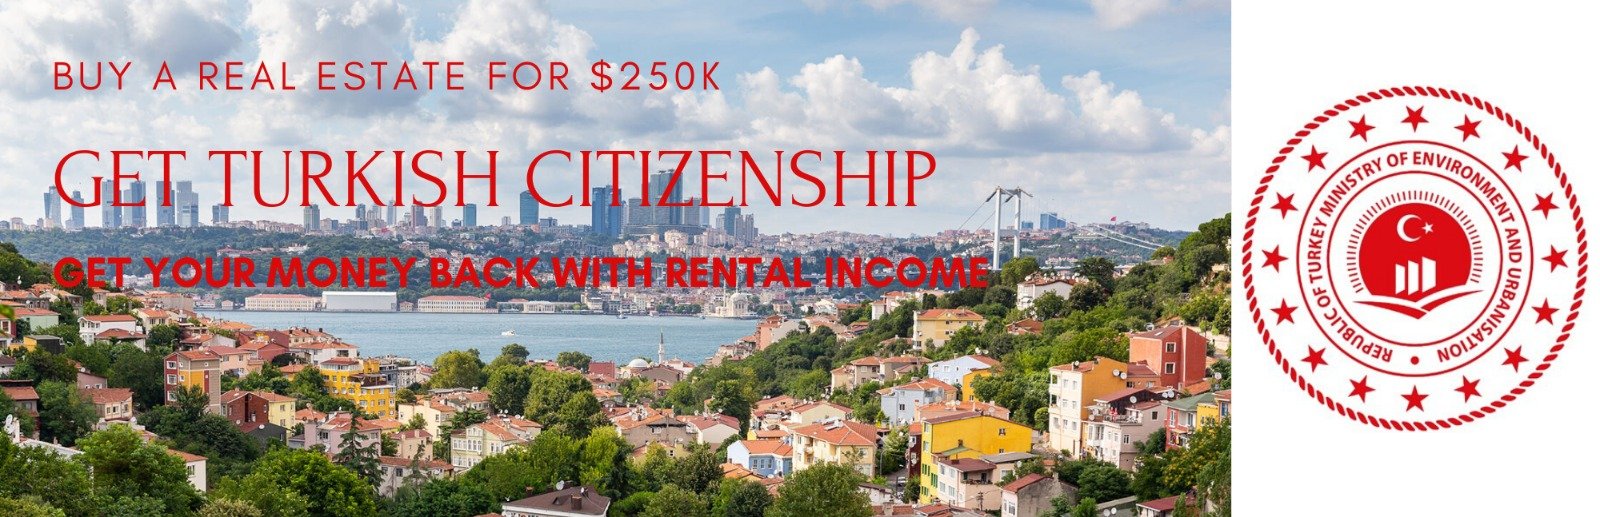 Turkish citizenship Investment